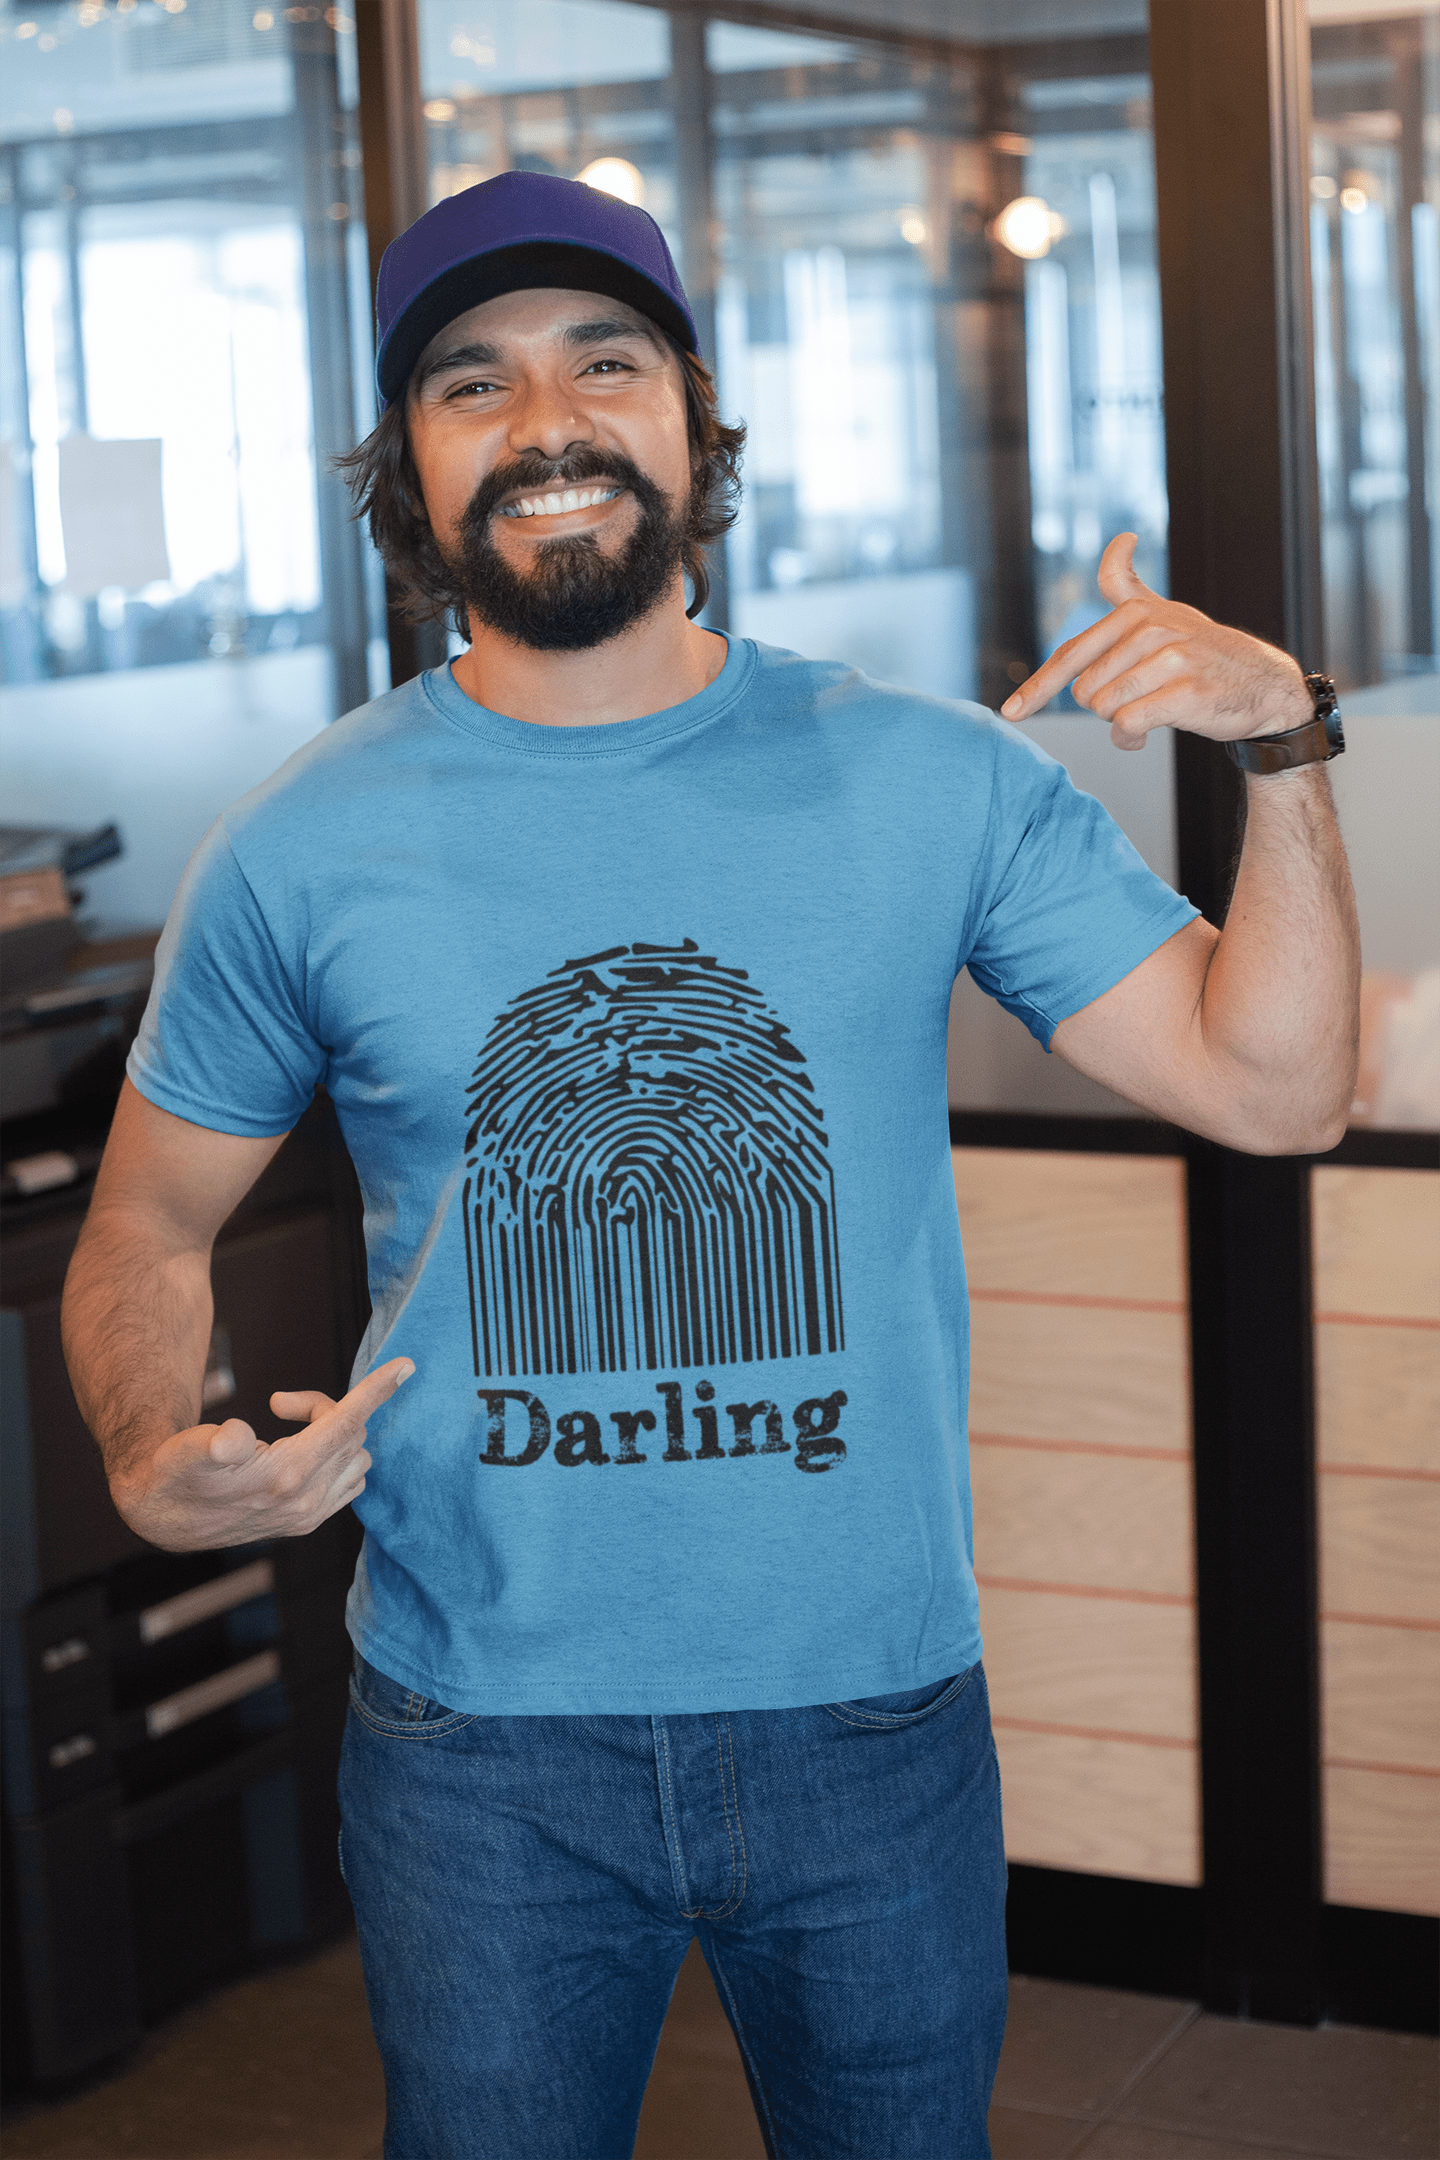 Darling Fingerprint, Blue, Men's Short Sleeve Round Neck T-shirt, gift t-shirt 00311